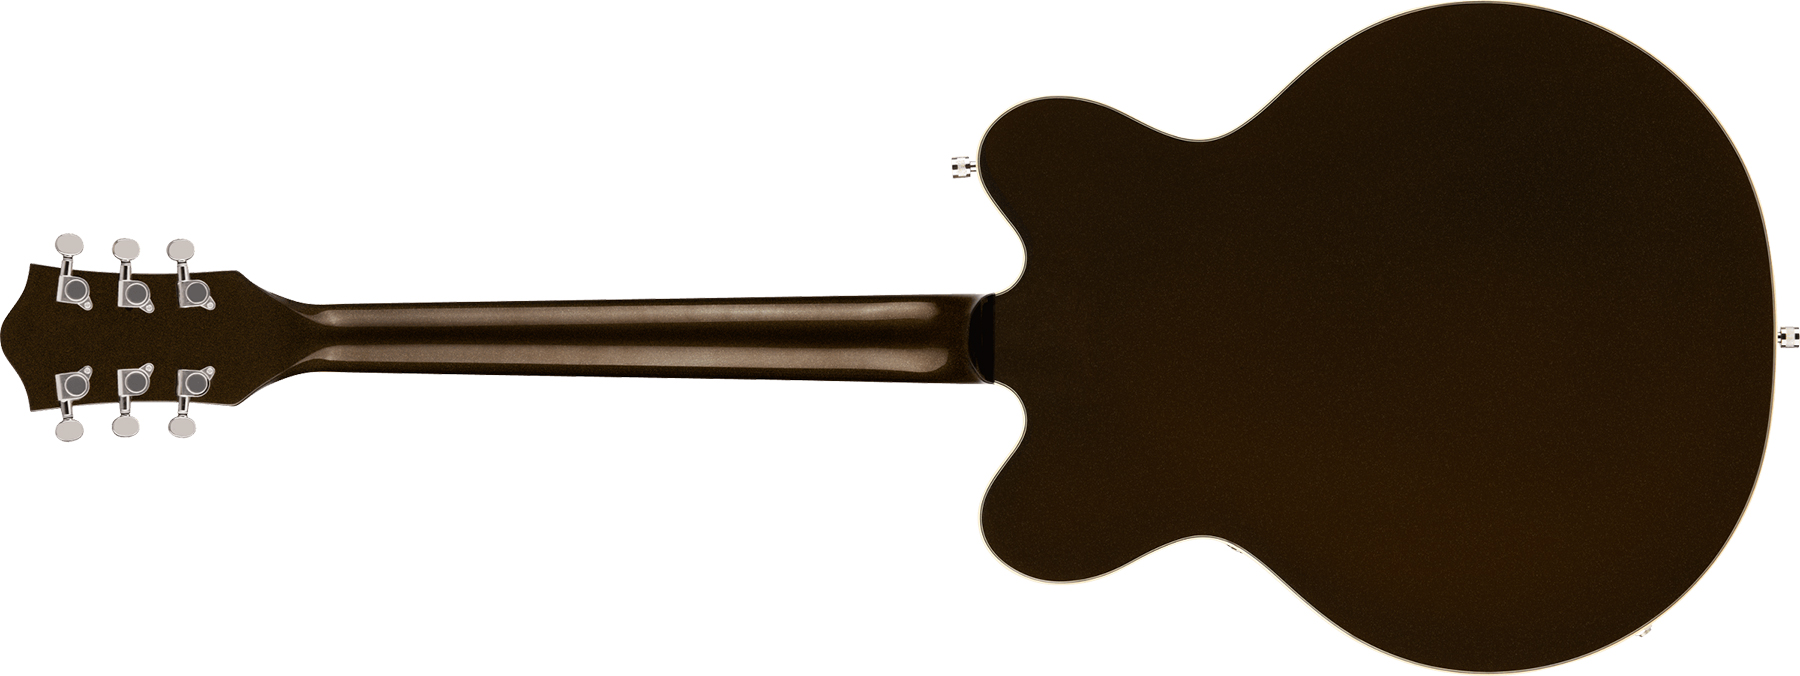 Gretsch G5622 Center Bloc Double Cut V-stoptail Electromatic Hh Ht Lau - Black Gold - Semi hollow elektriche gitaar - Variation 1